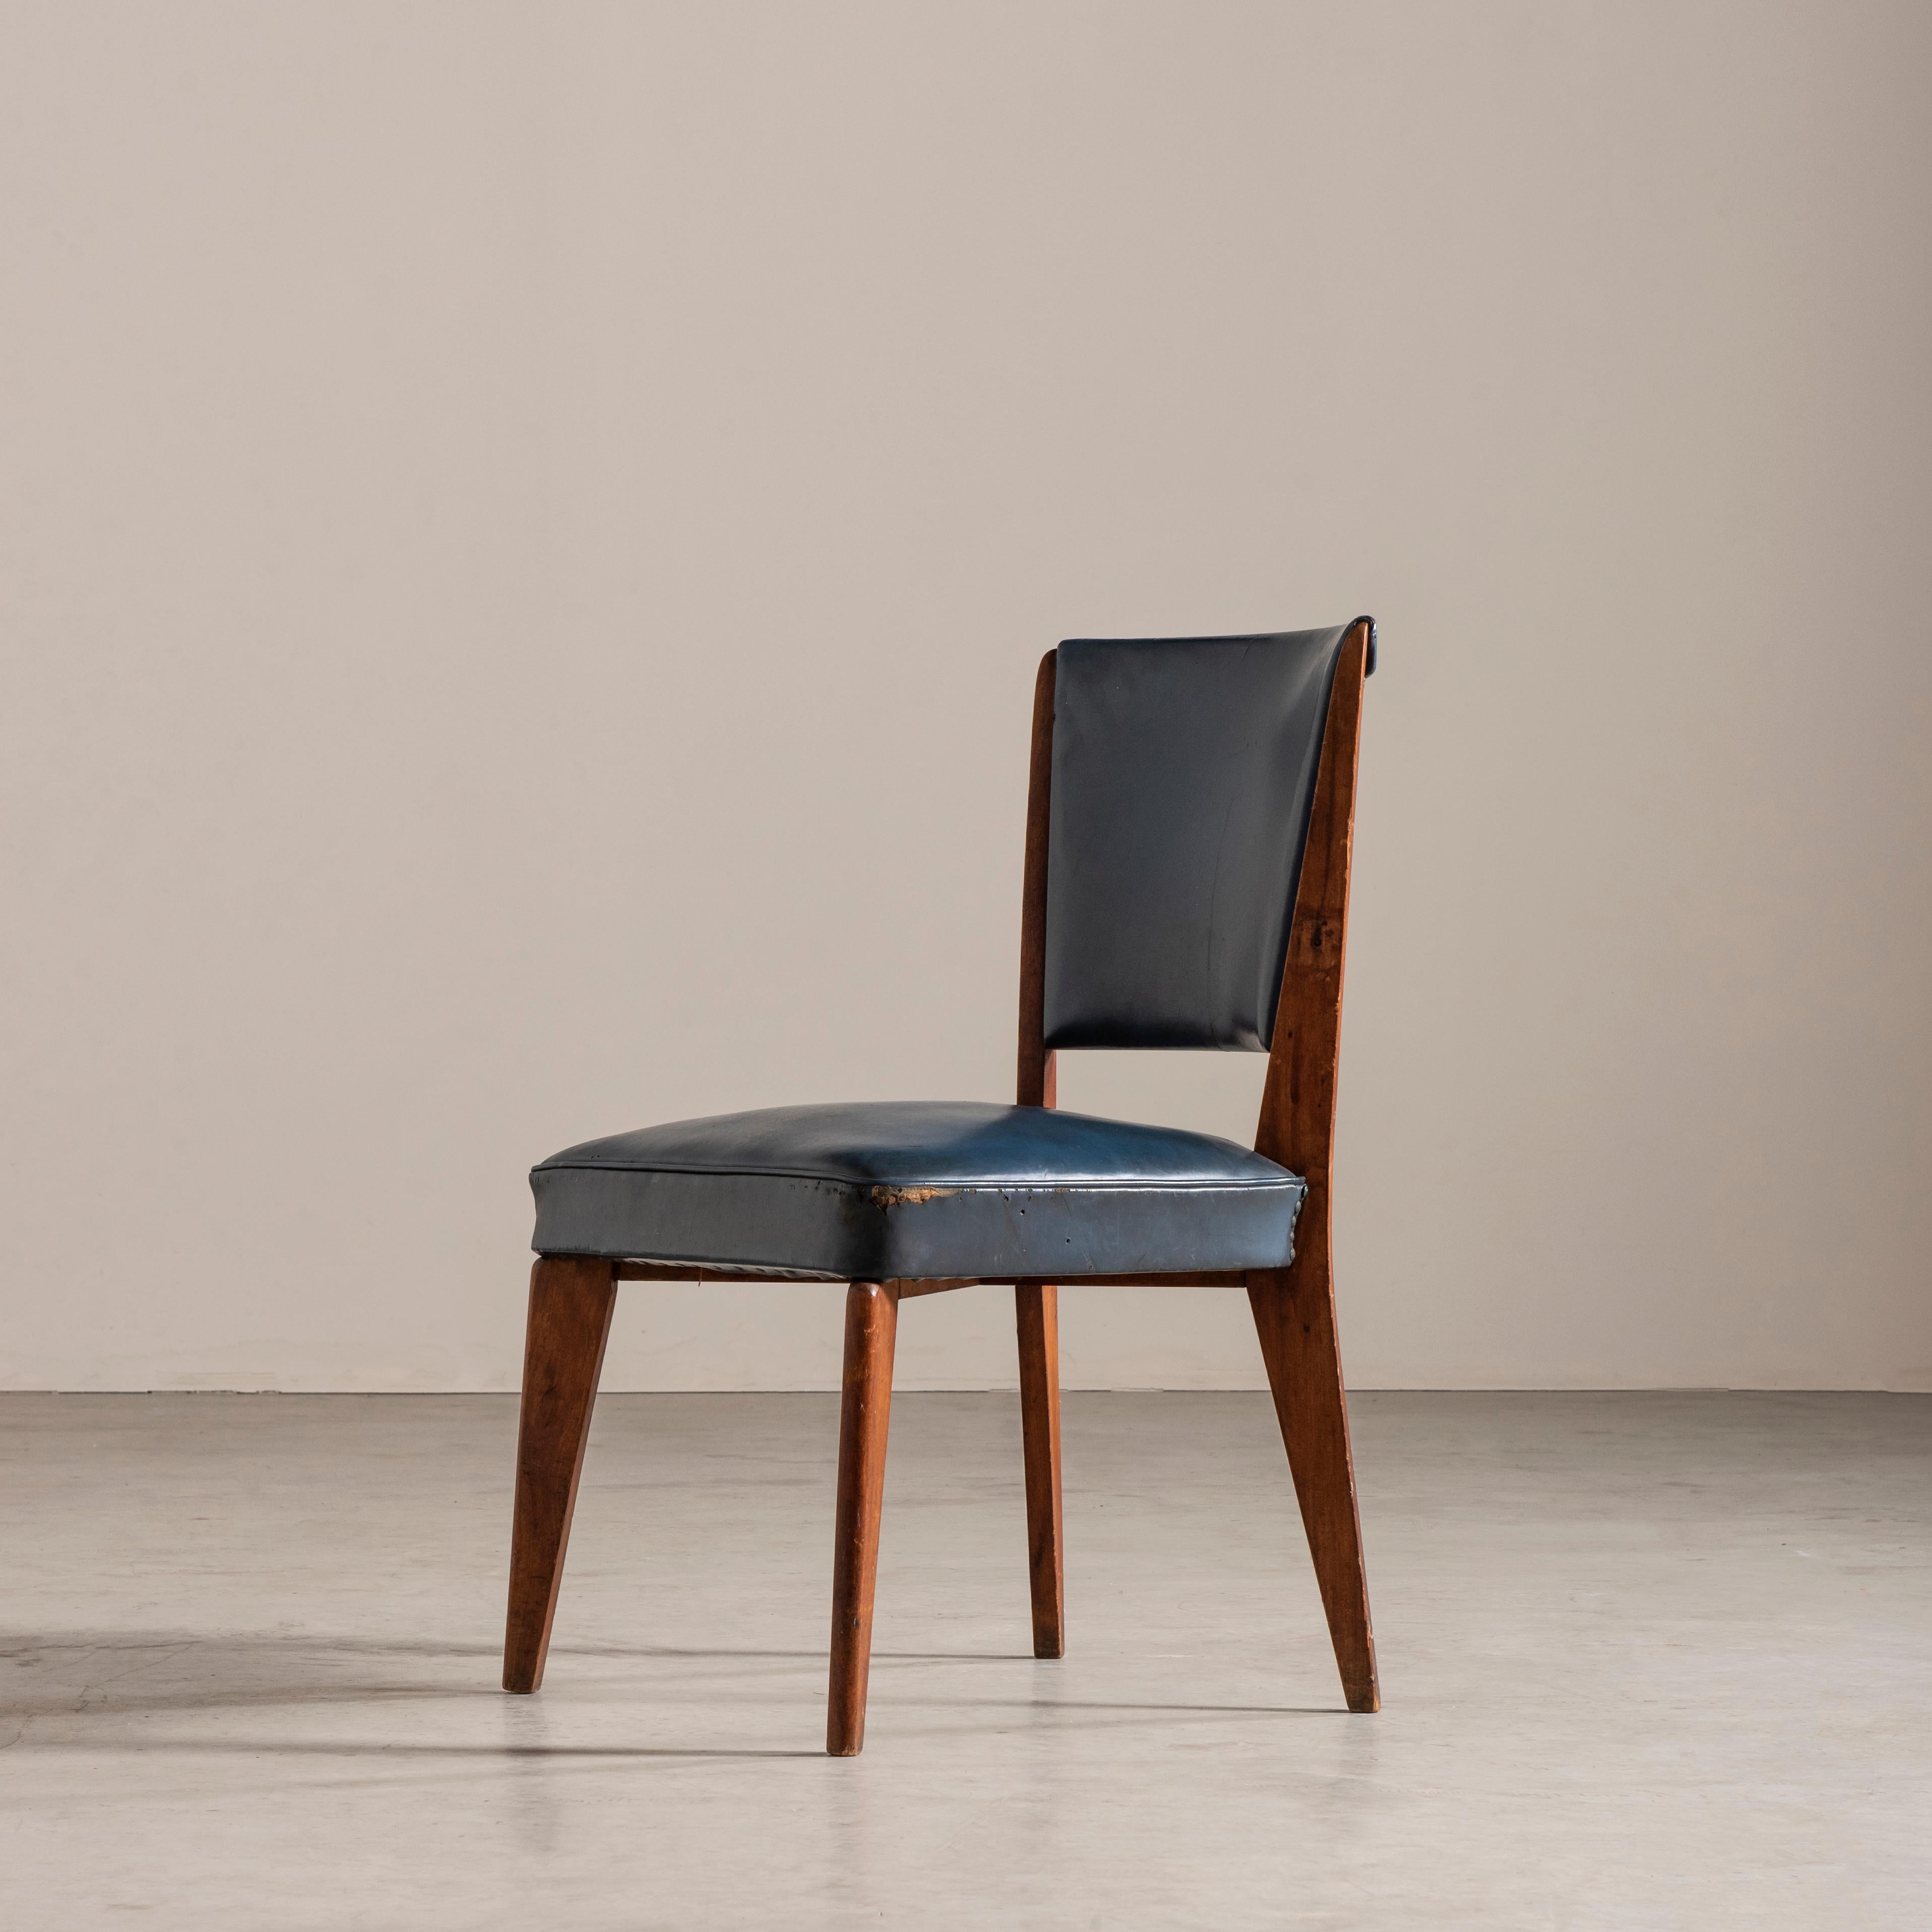 C12 Chairs, Lina Bo Bardi for Paubra, 1950s, Brazilian Mid-Century Modern 1